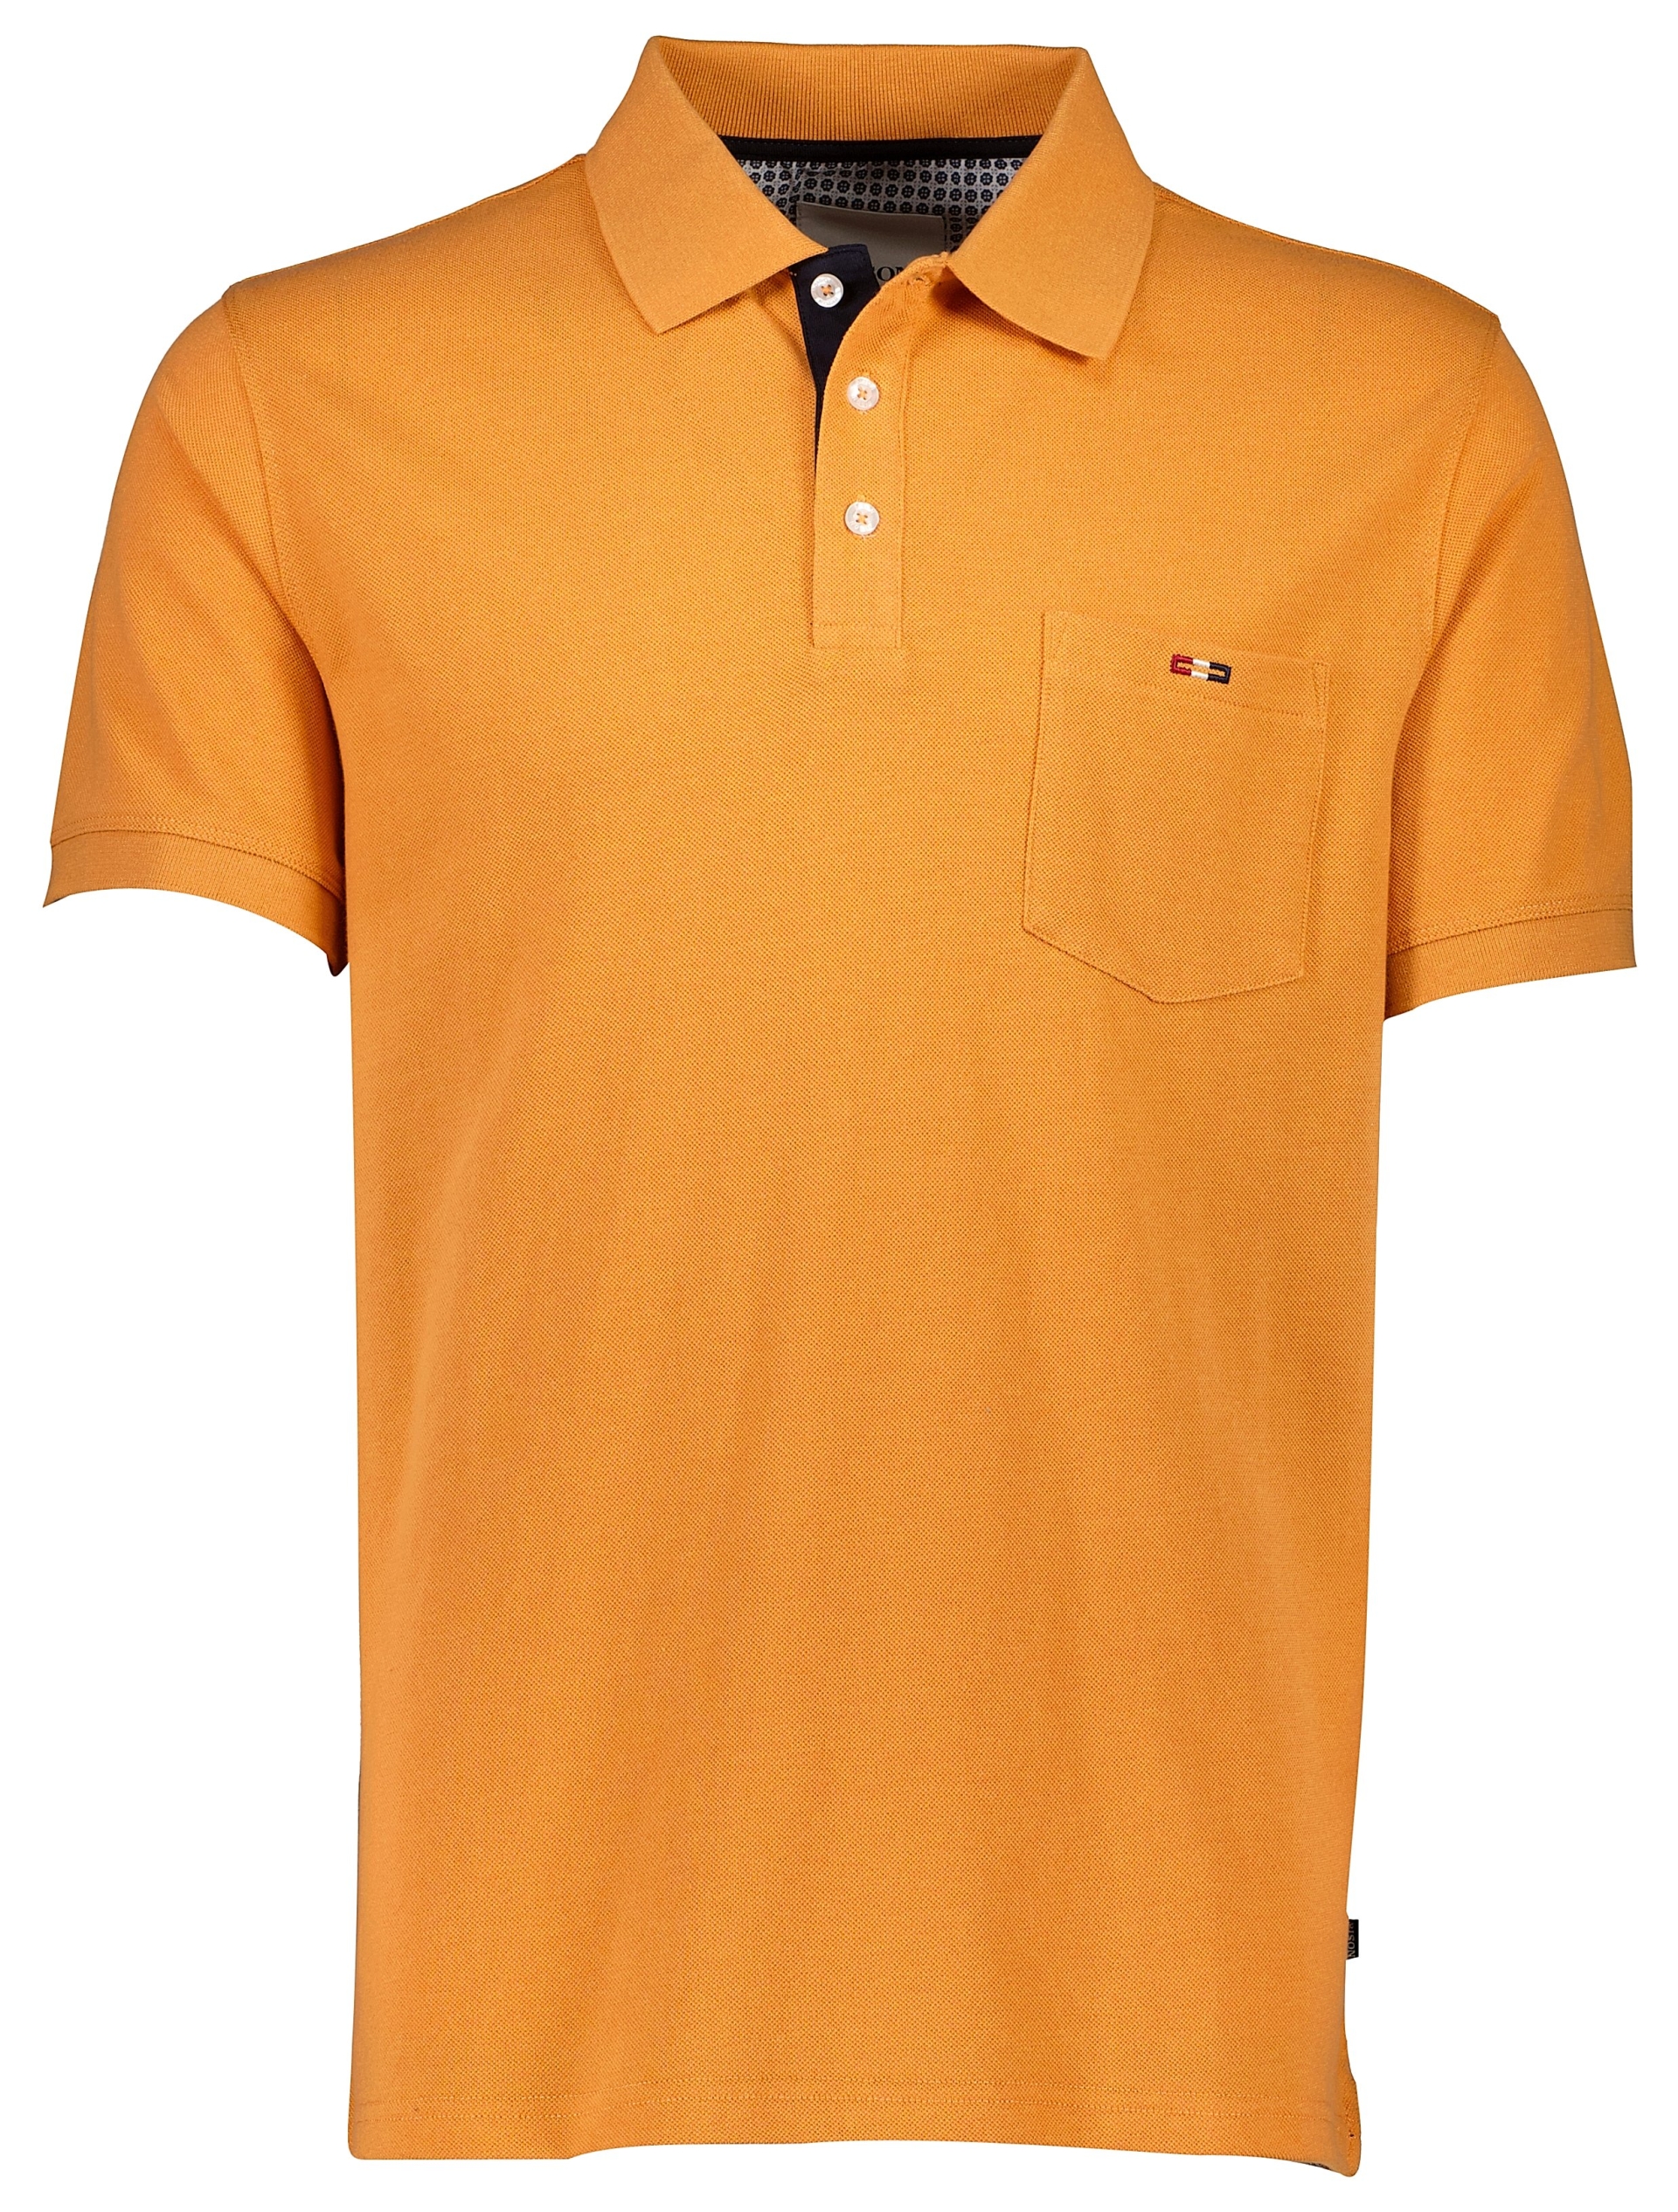 Bison Poloshirt gul / yellow 224